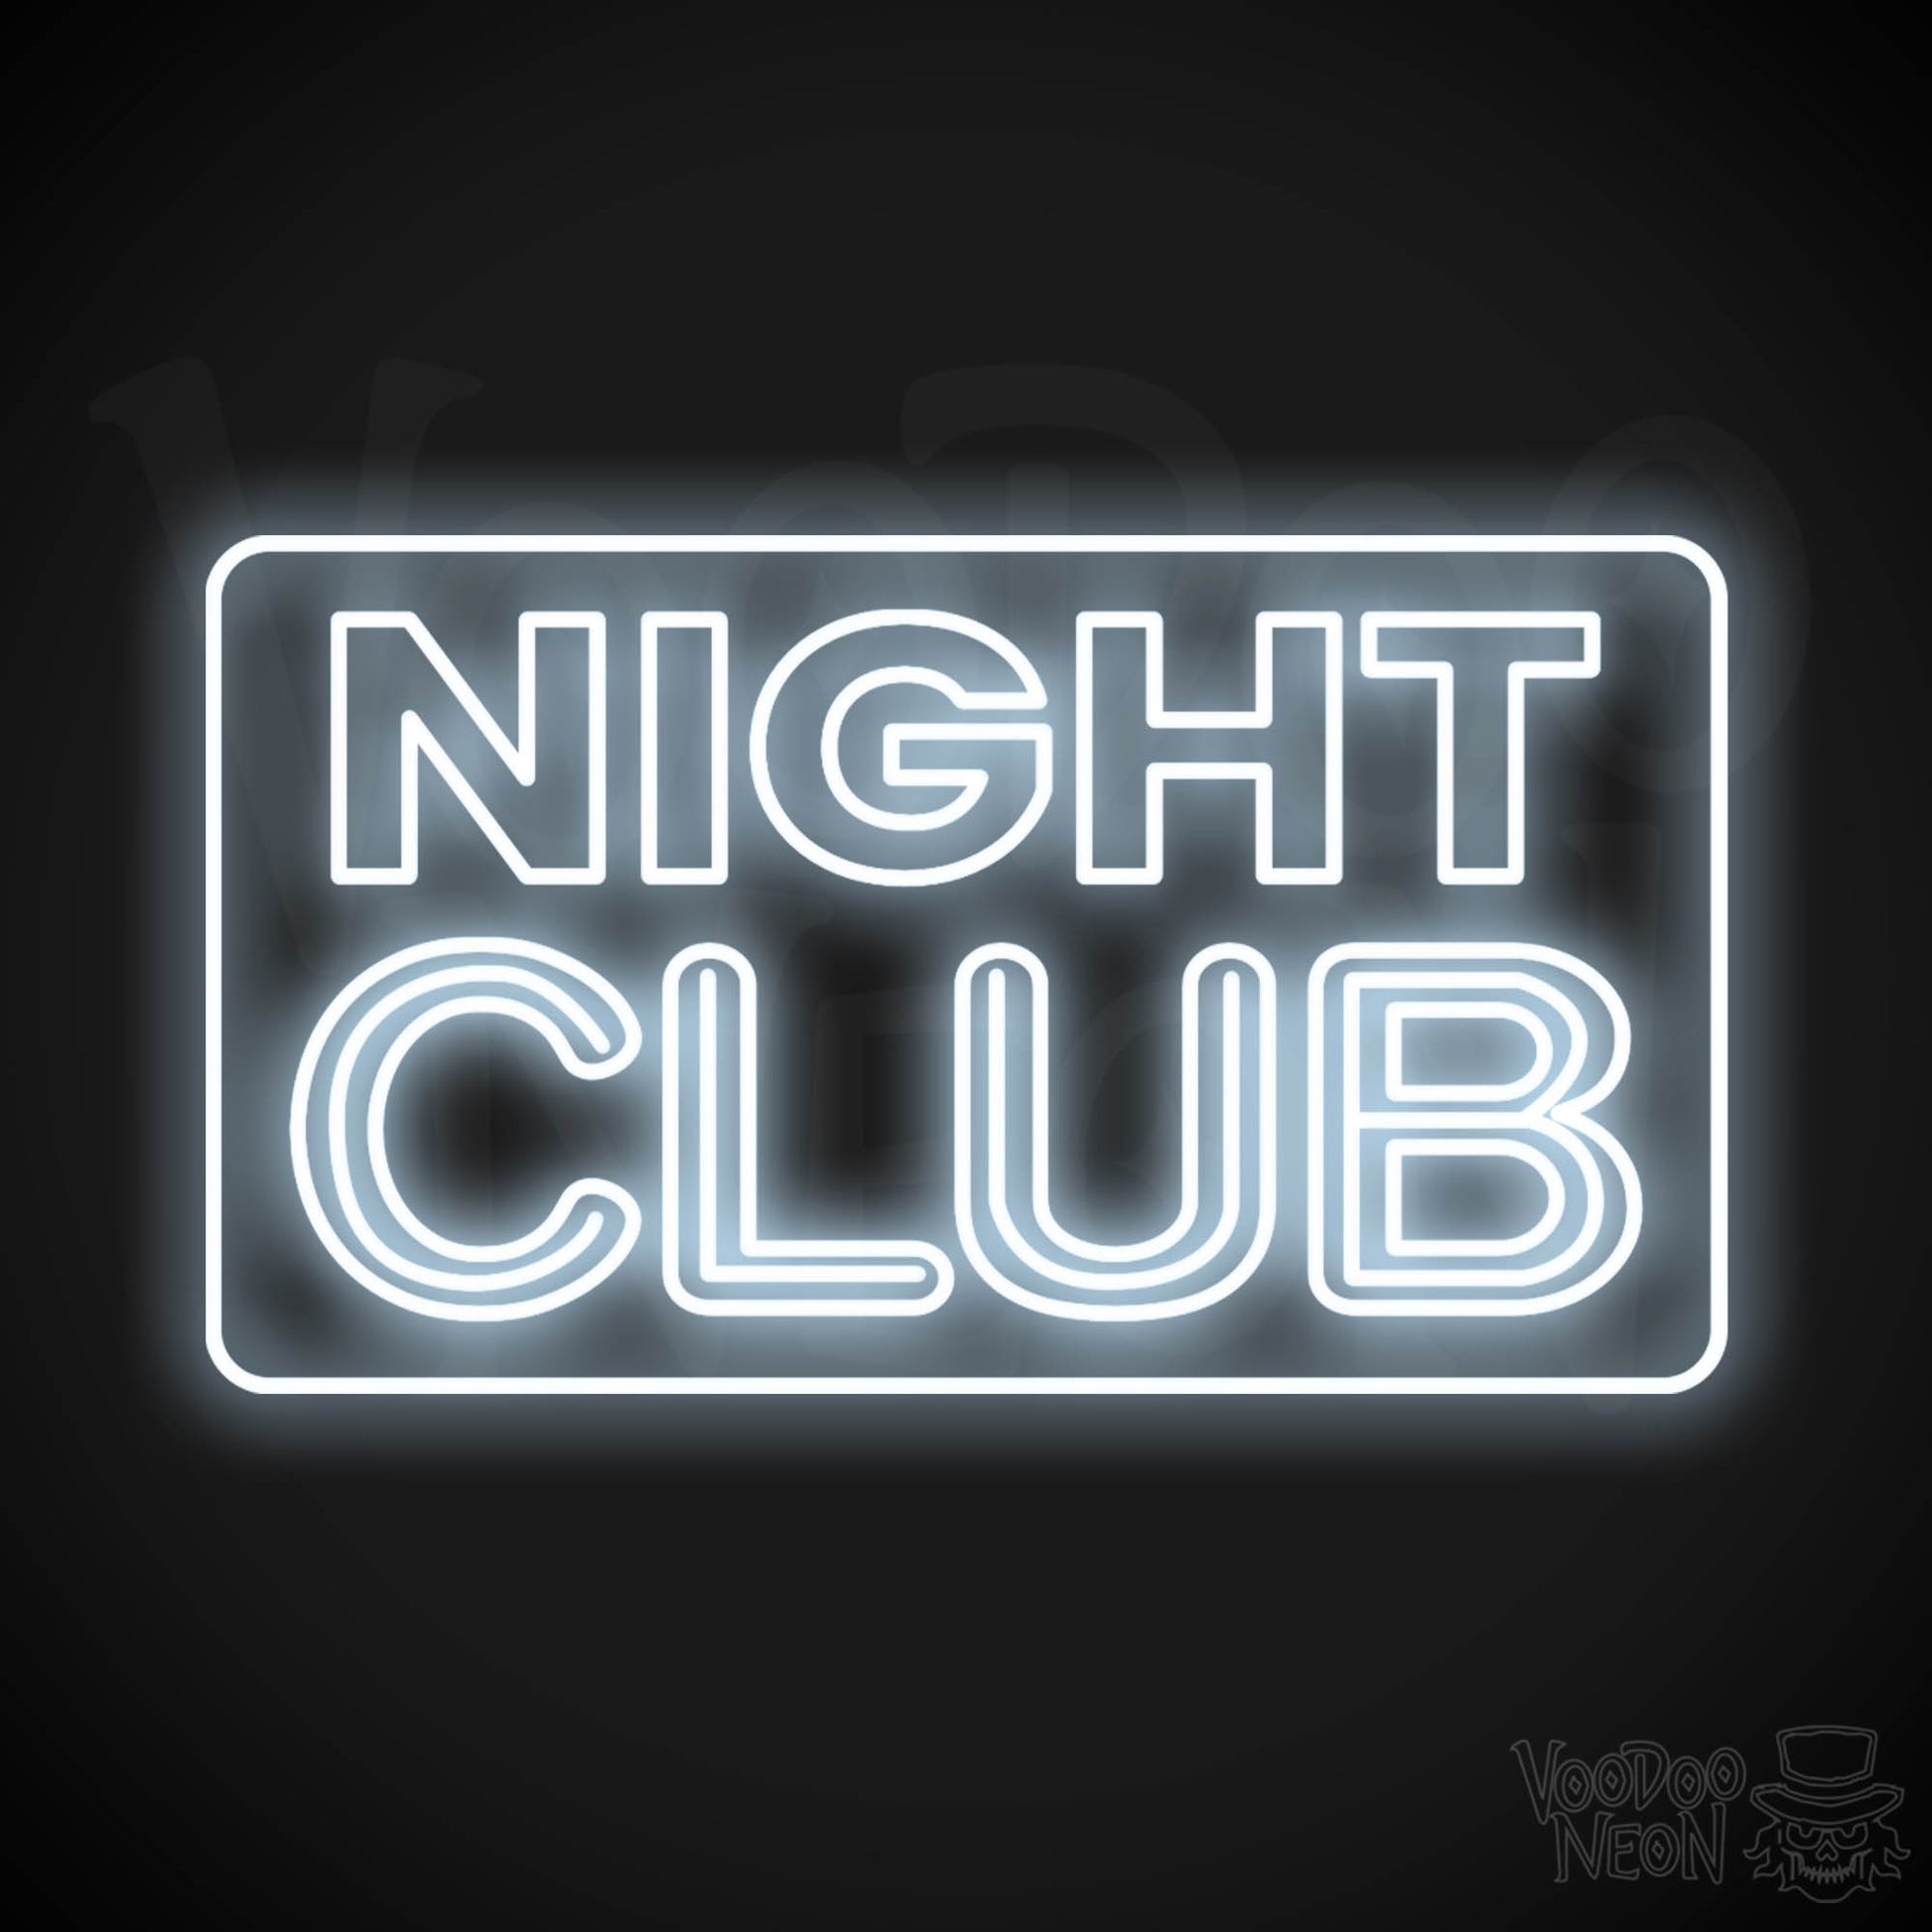 Night Club LED Neon - Cool White